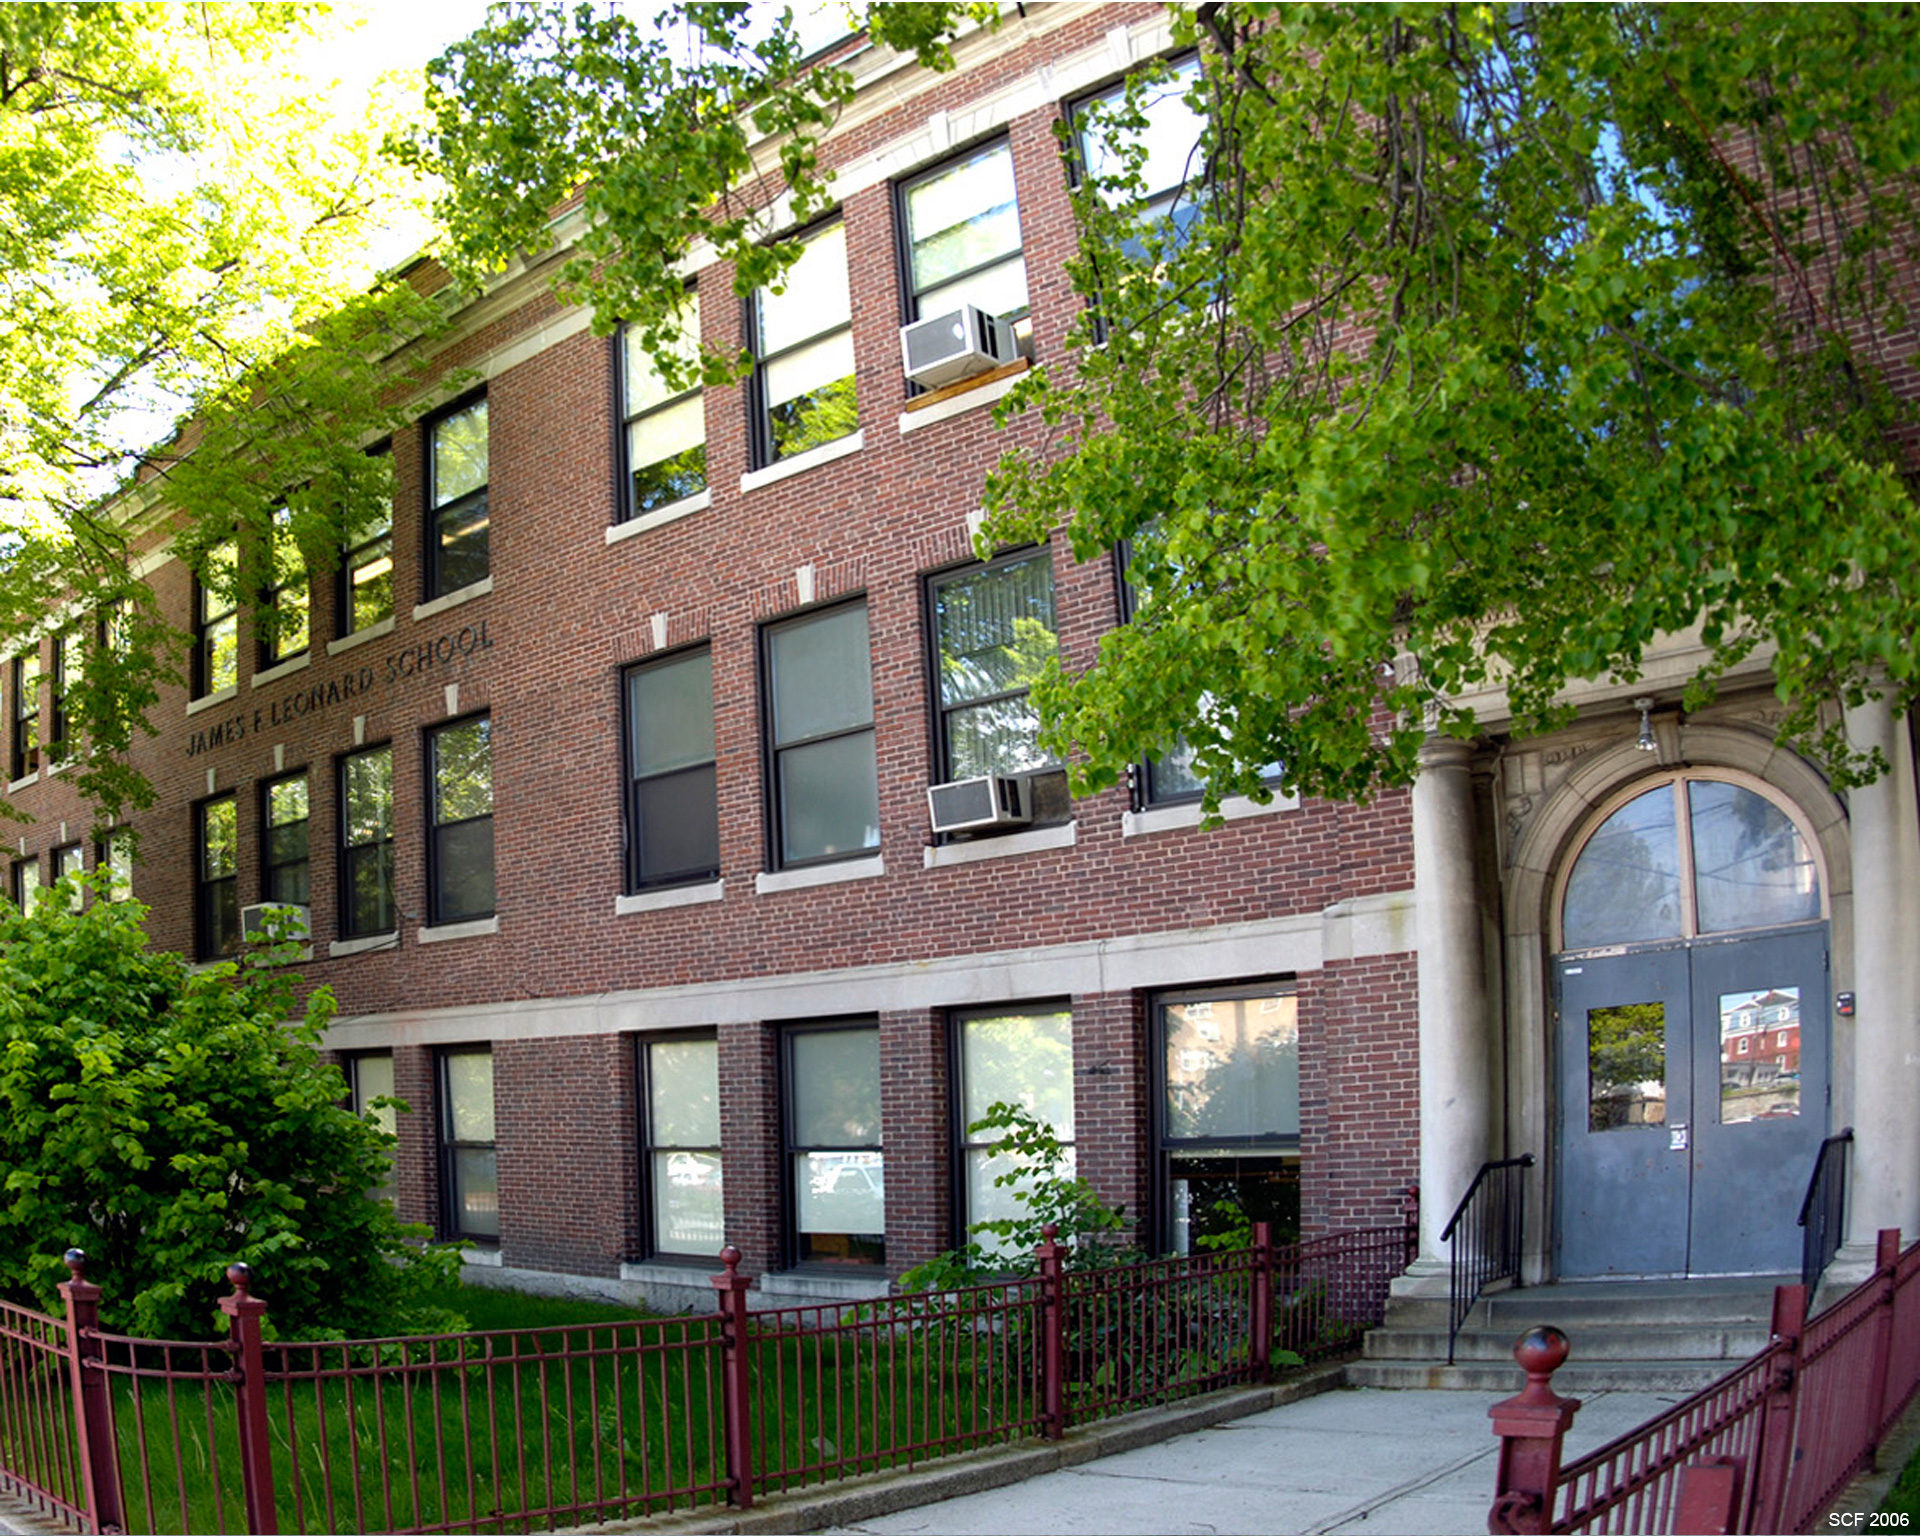 entrance to Leonard Middle School